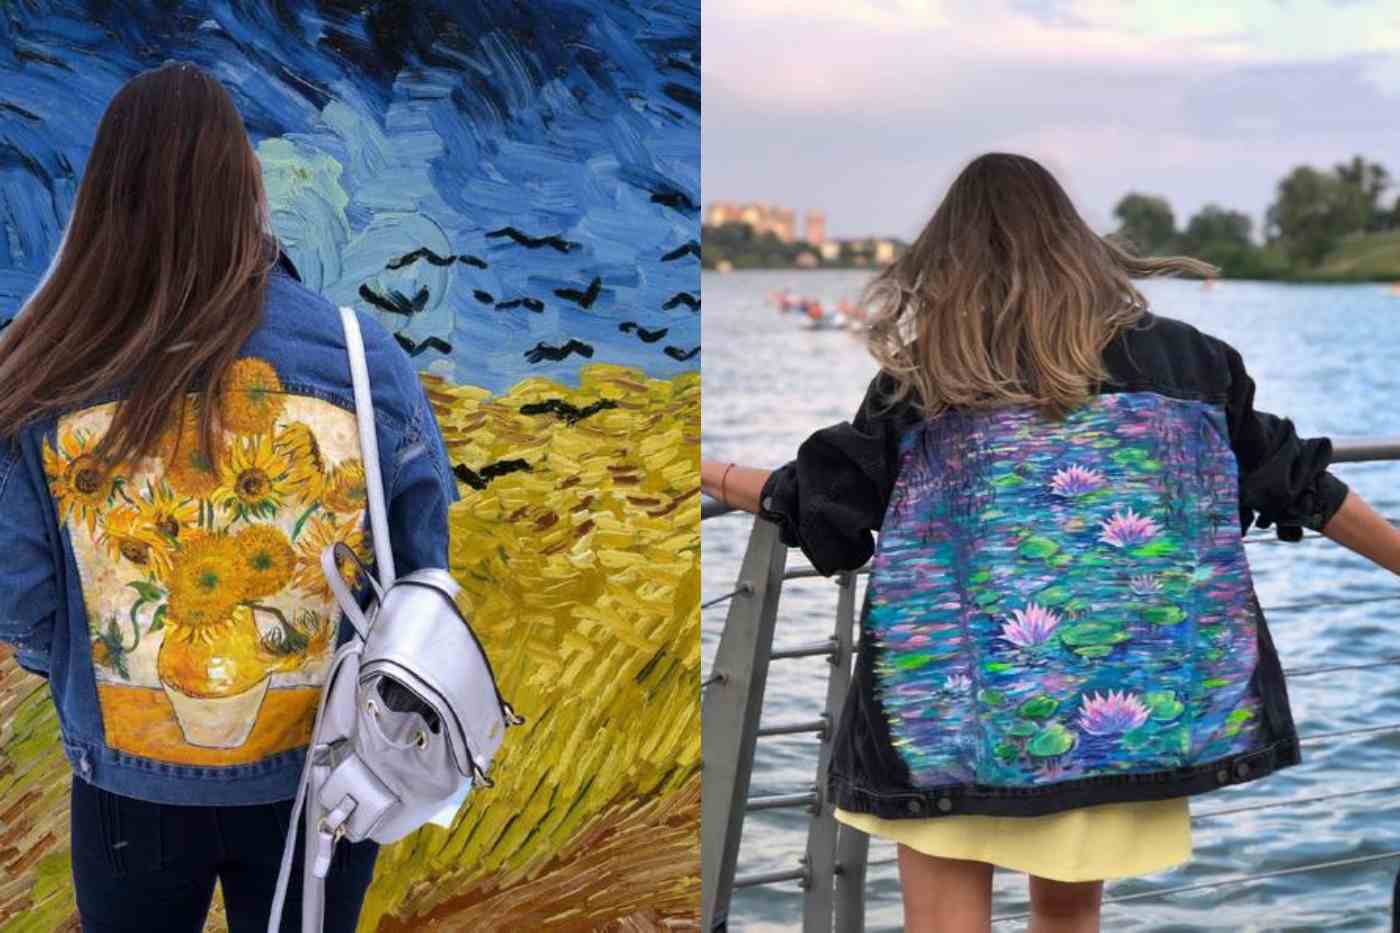 Jean Jackets painted Monet van Gogh Pictures